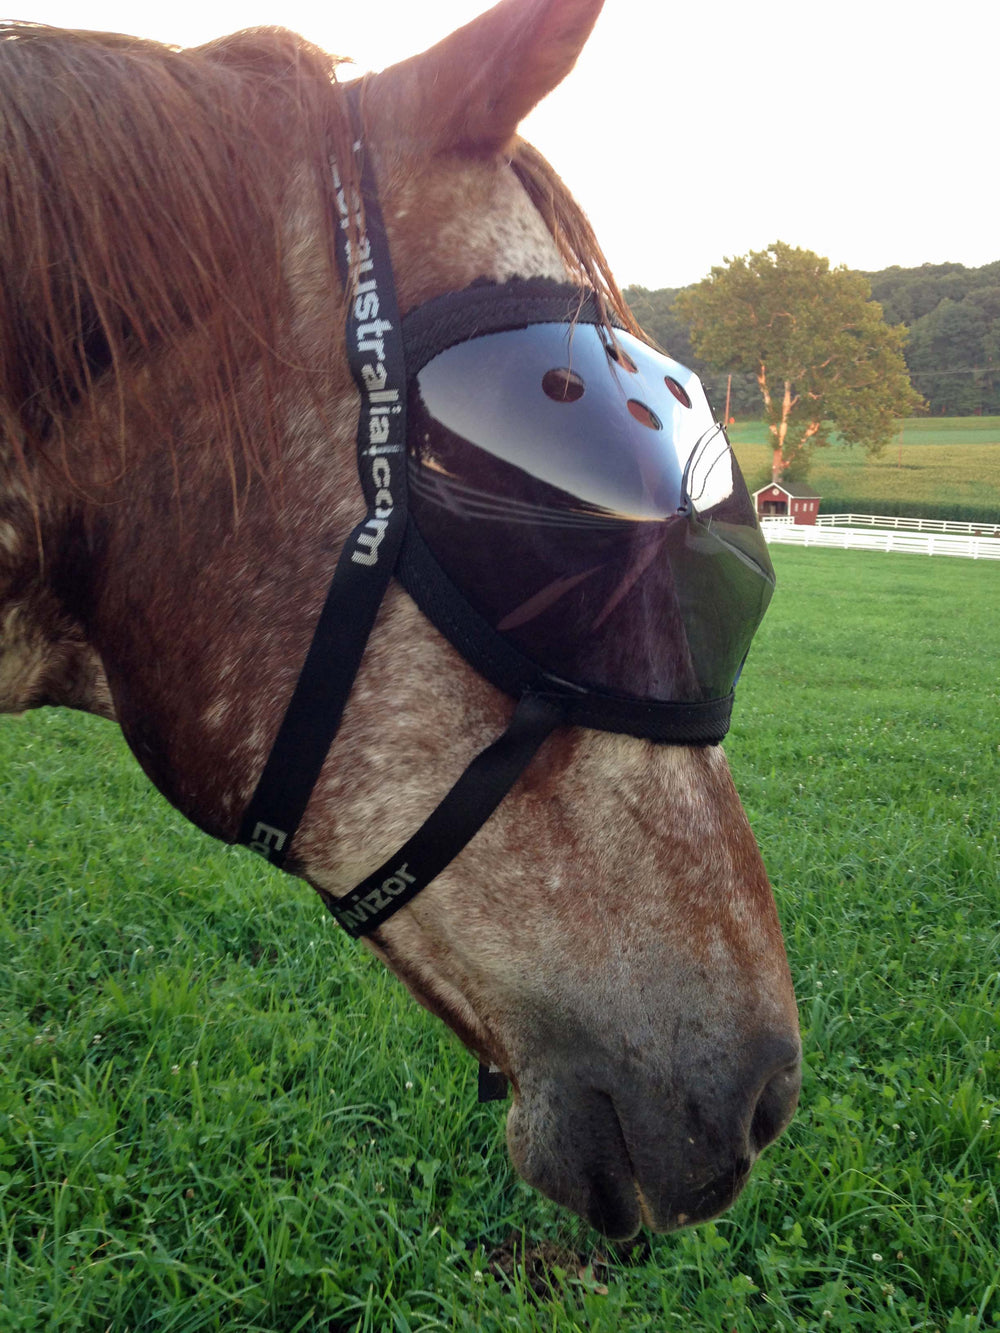 Recovery Vizor Medical UV Eye Protection for Horses